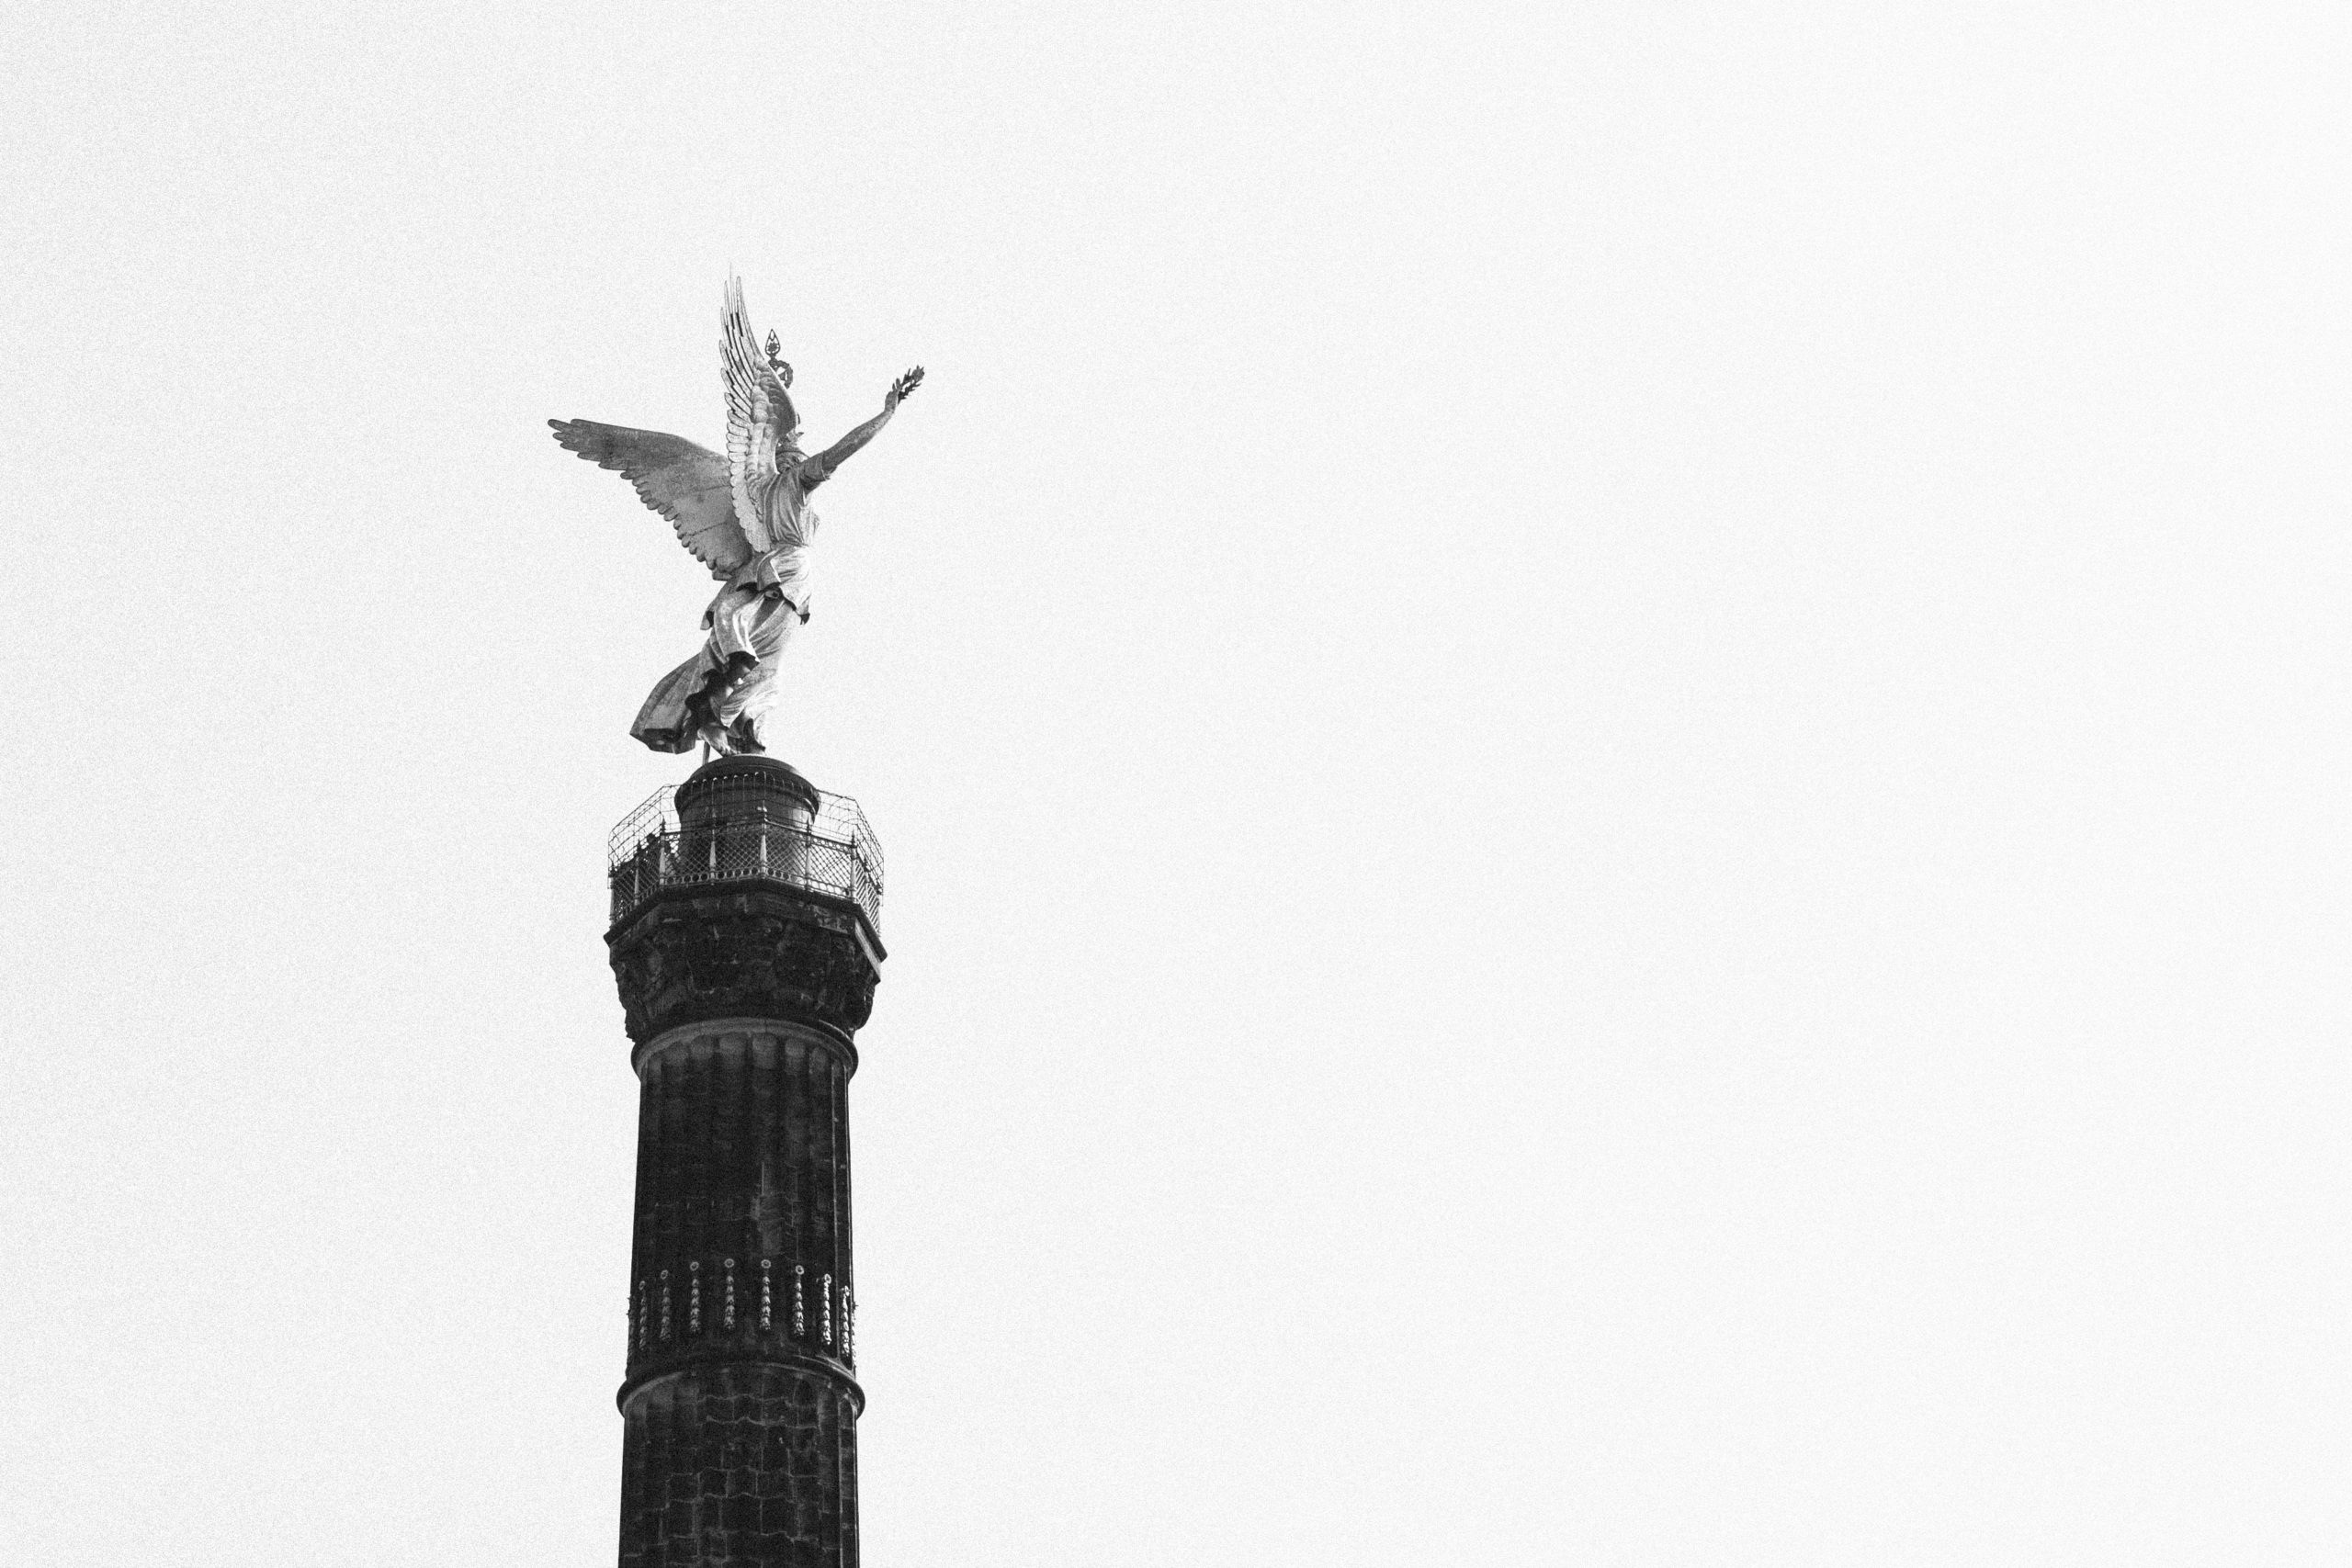 The figure atop the Siegessäule found in the Tiergarten, Berlin, Germany